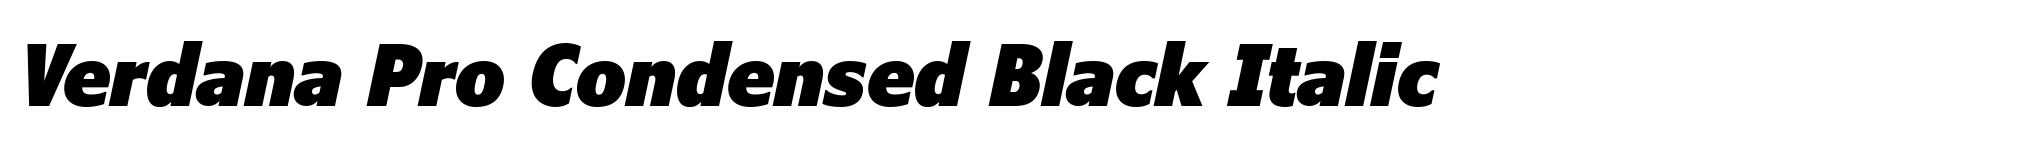 Verdana Pro Condensed Black Italic image